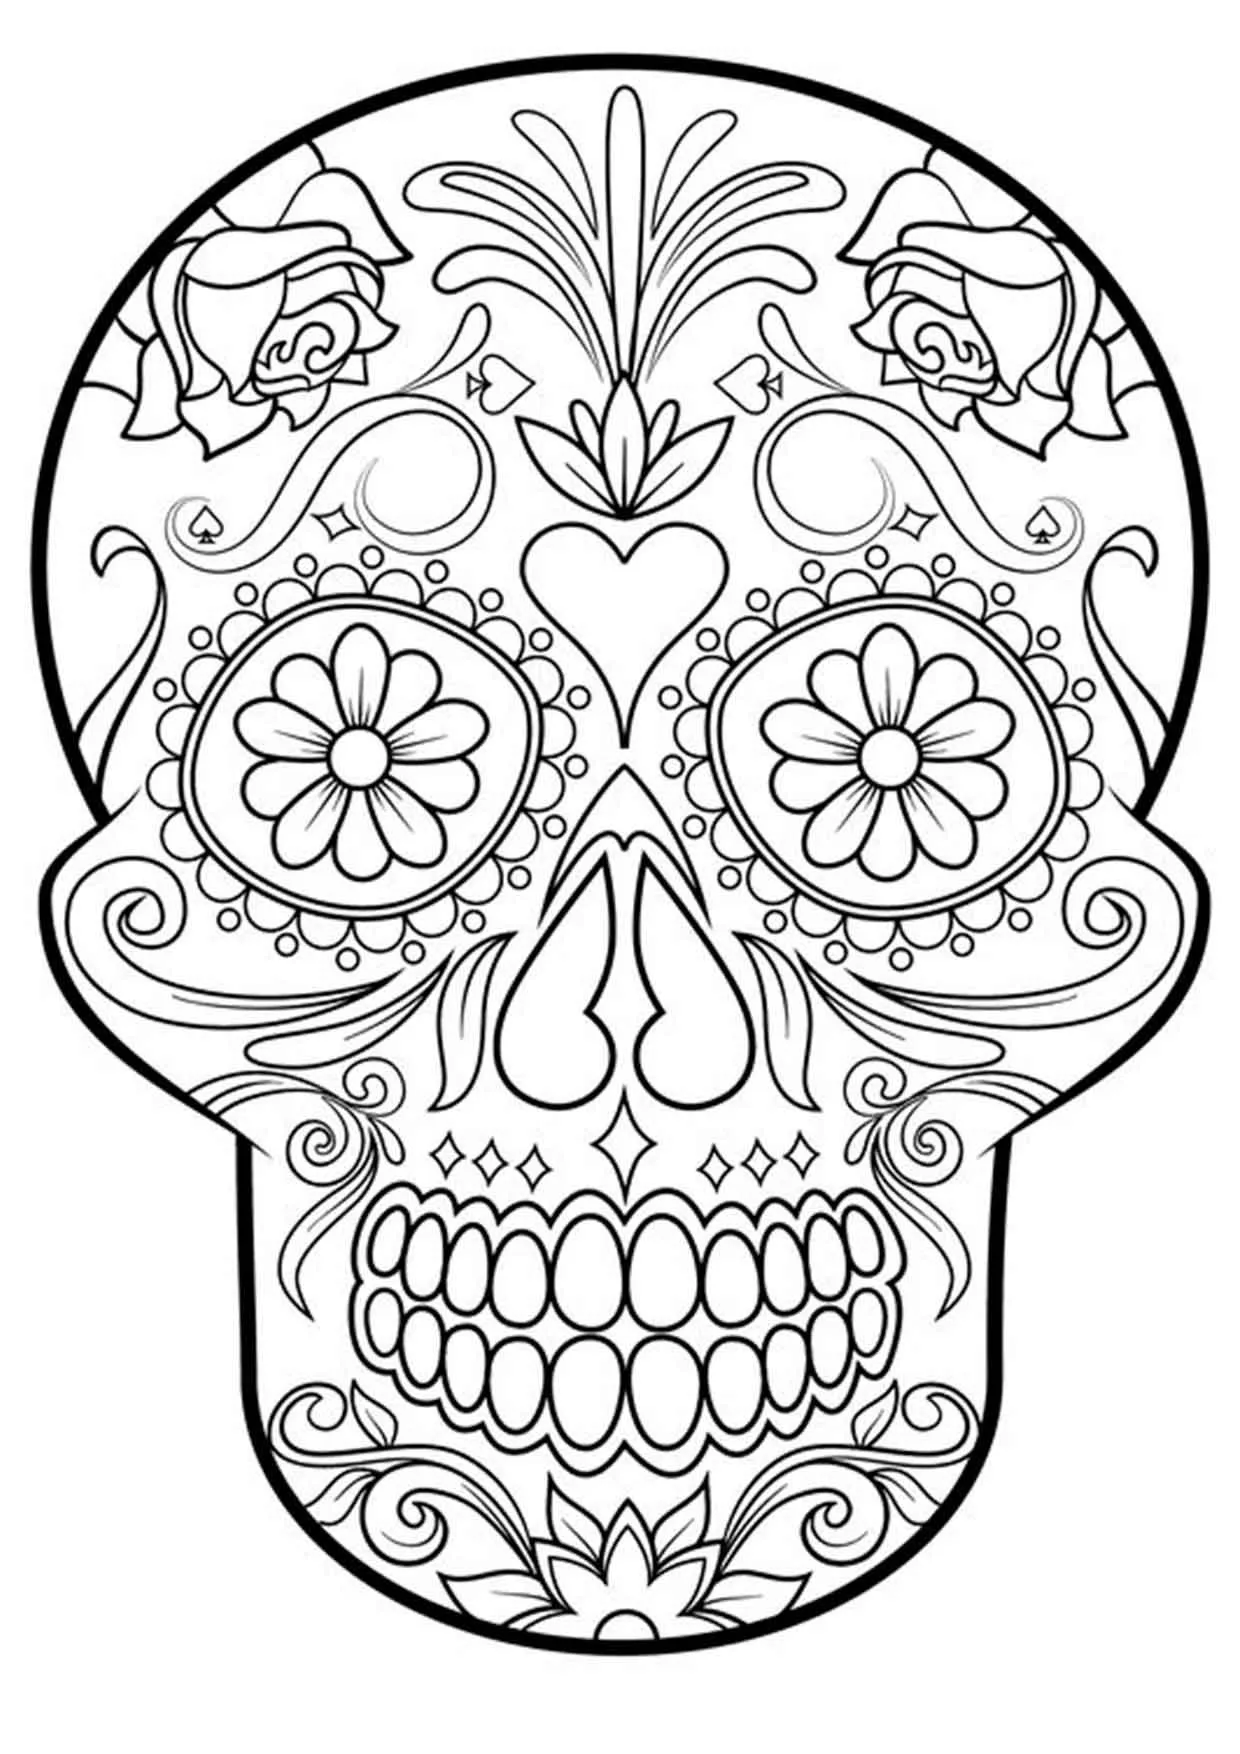 Resultado de imagem para mascaras de halloween para imprimir | Skull  coloring pages, Mandala coloring pages, Halloween coloring pages